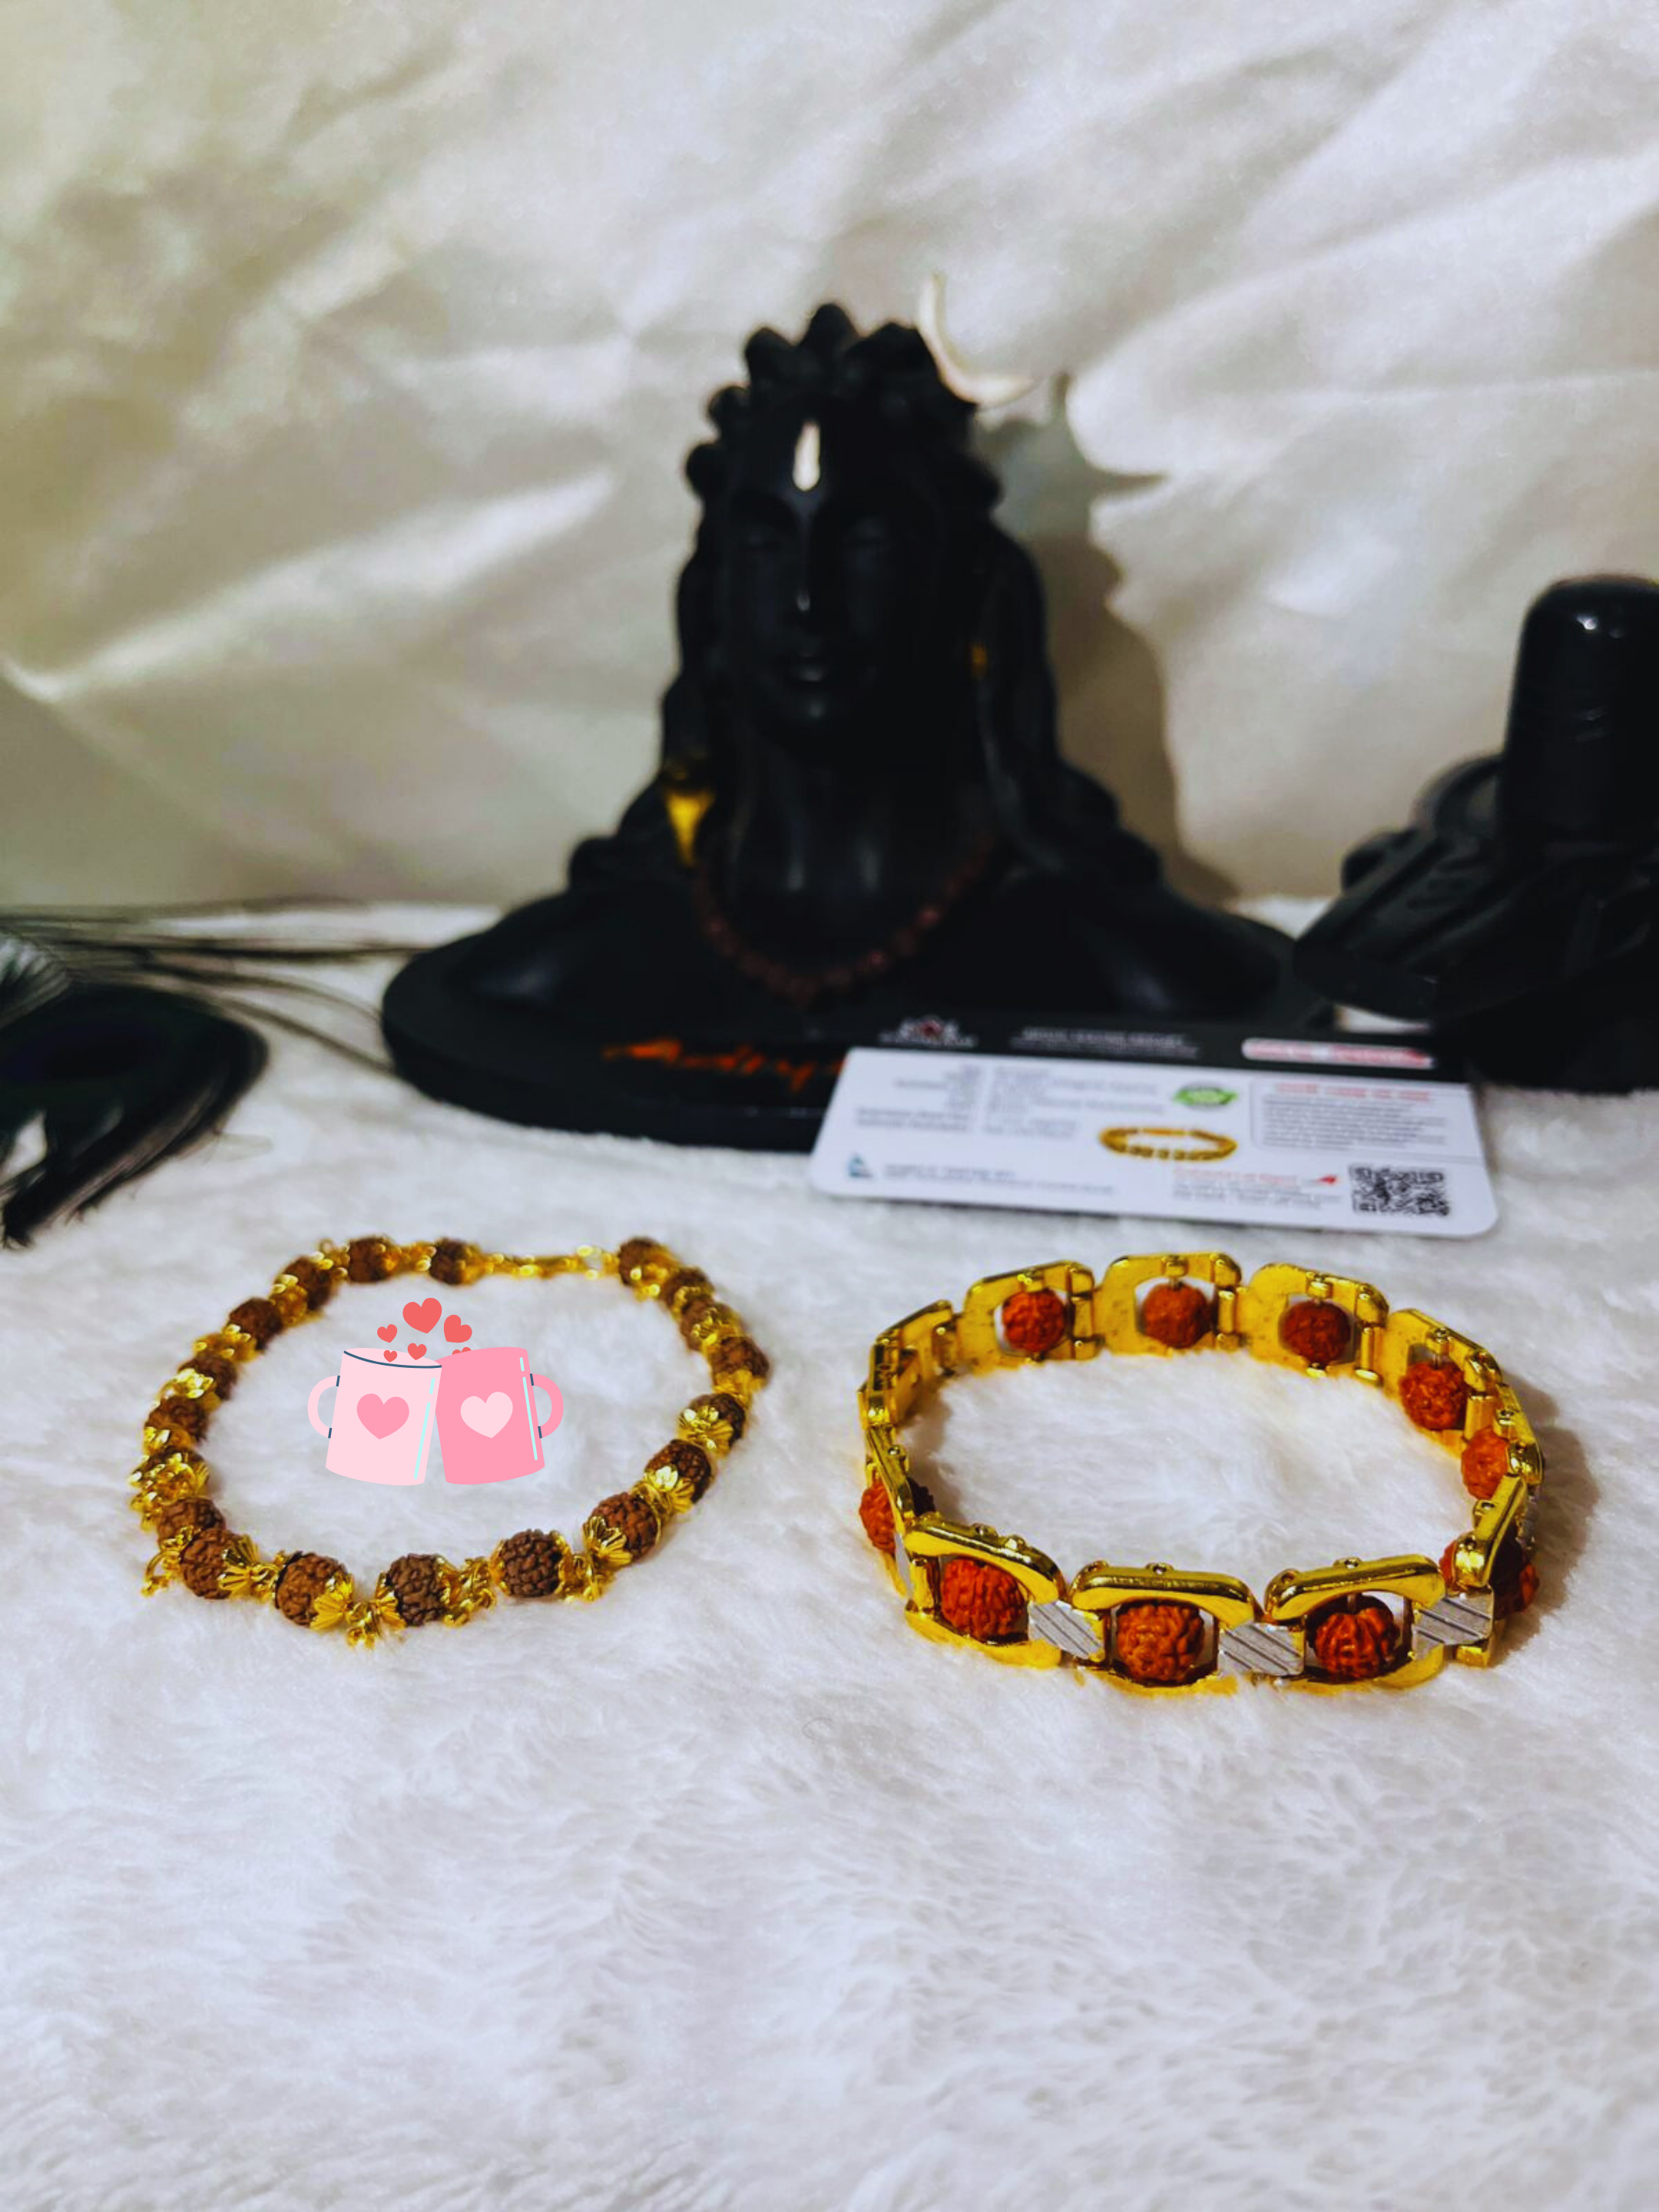 Couple Combo - Original Natural Rudraksha Bracelet (5 Mukhi) - Best Value Combo Offer!!